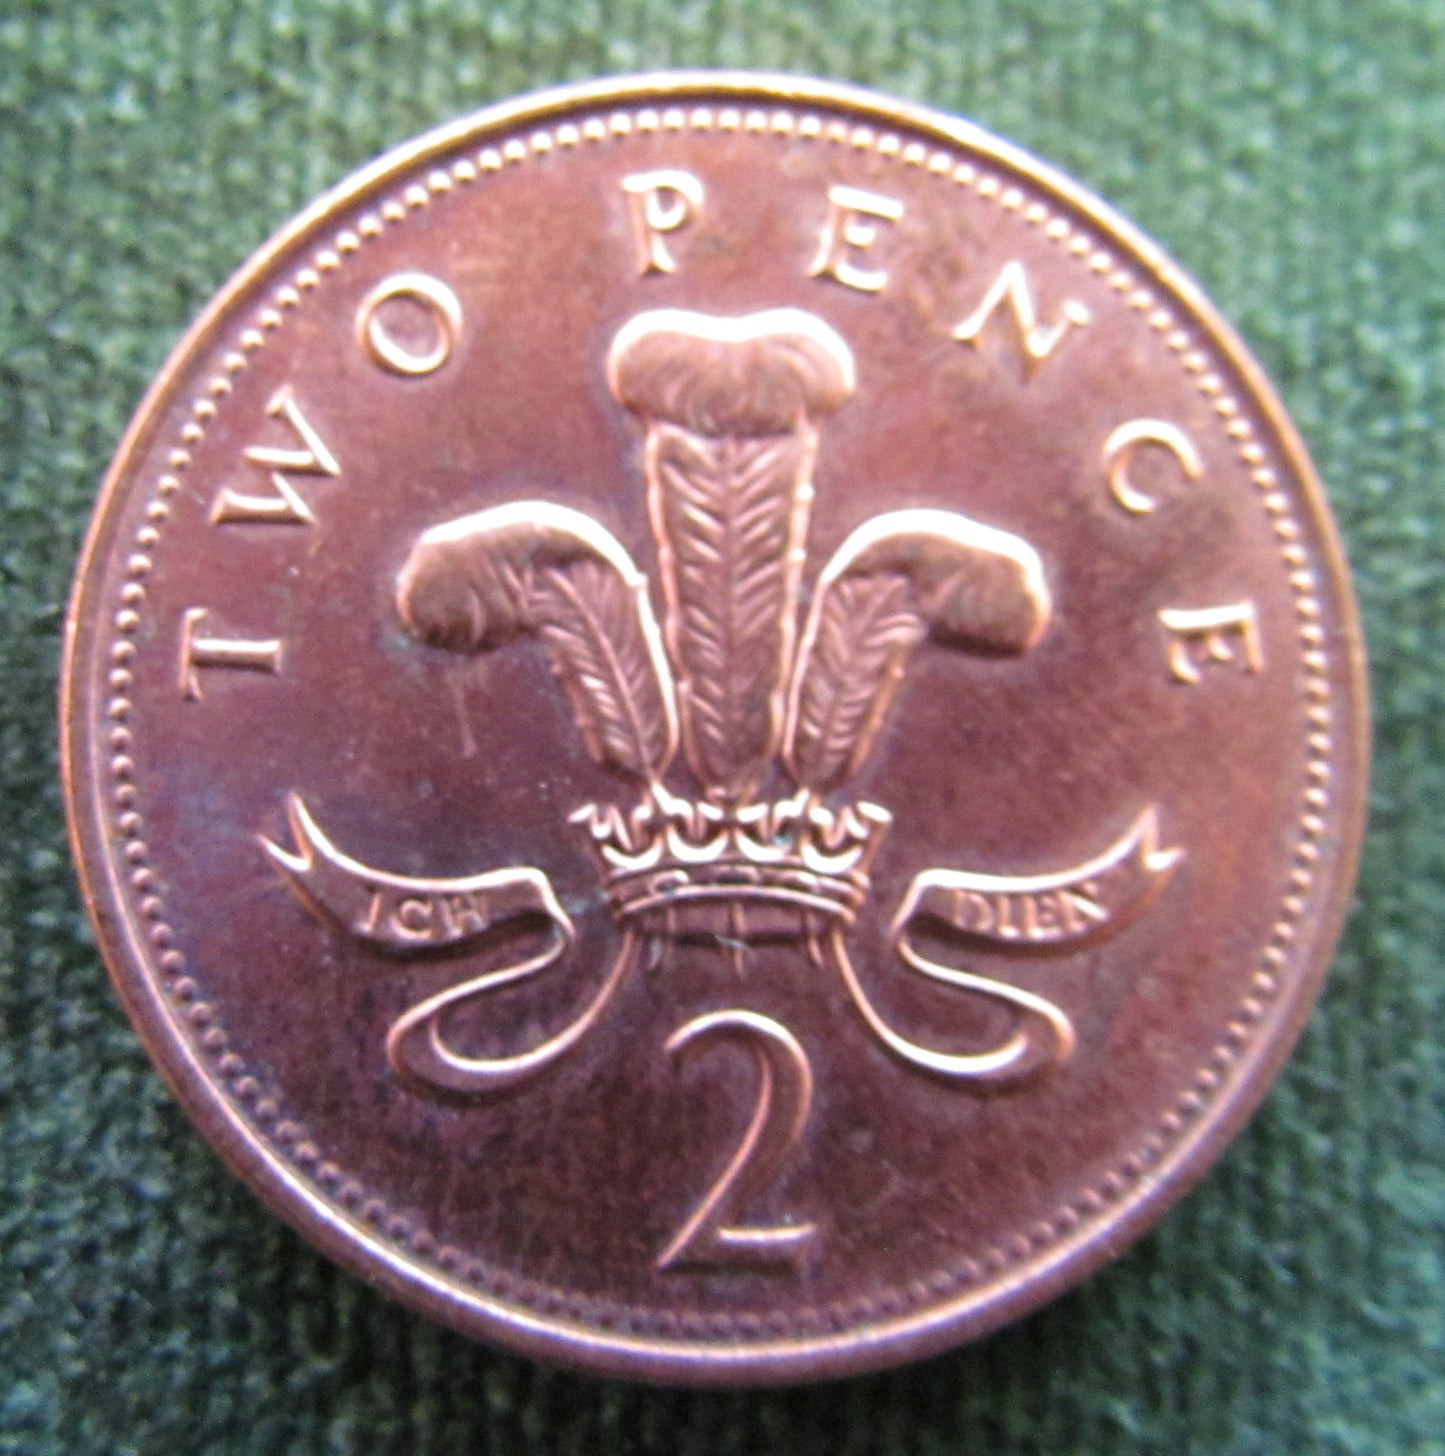 GB British UK English 2000 2 New Pence Queen Elizabeth II Coin